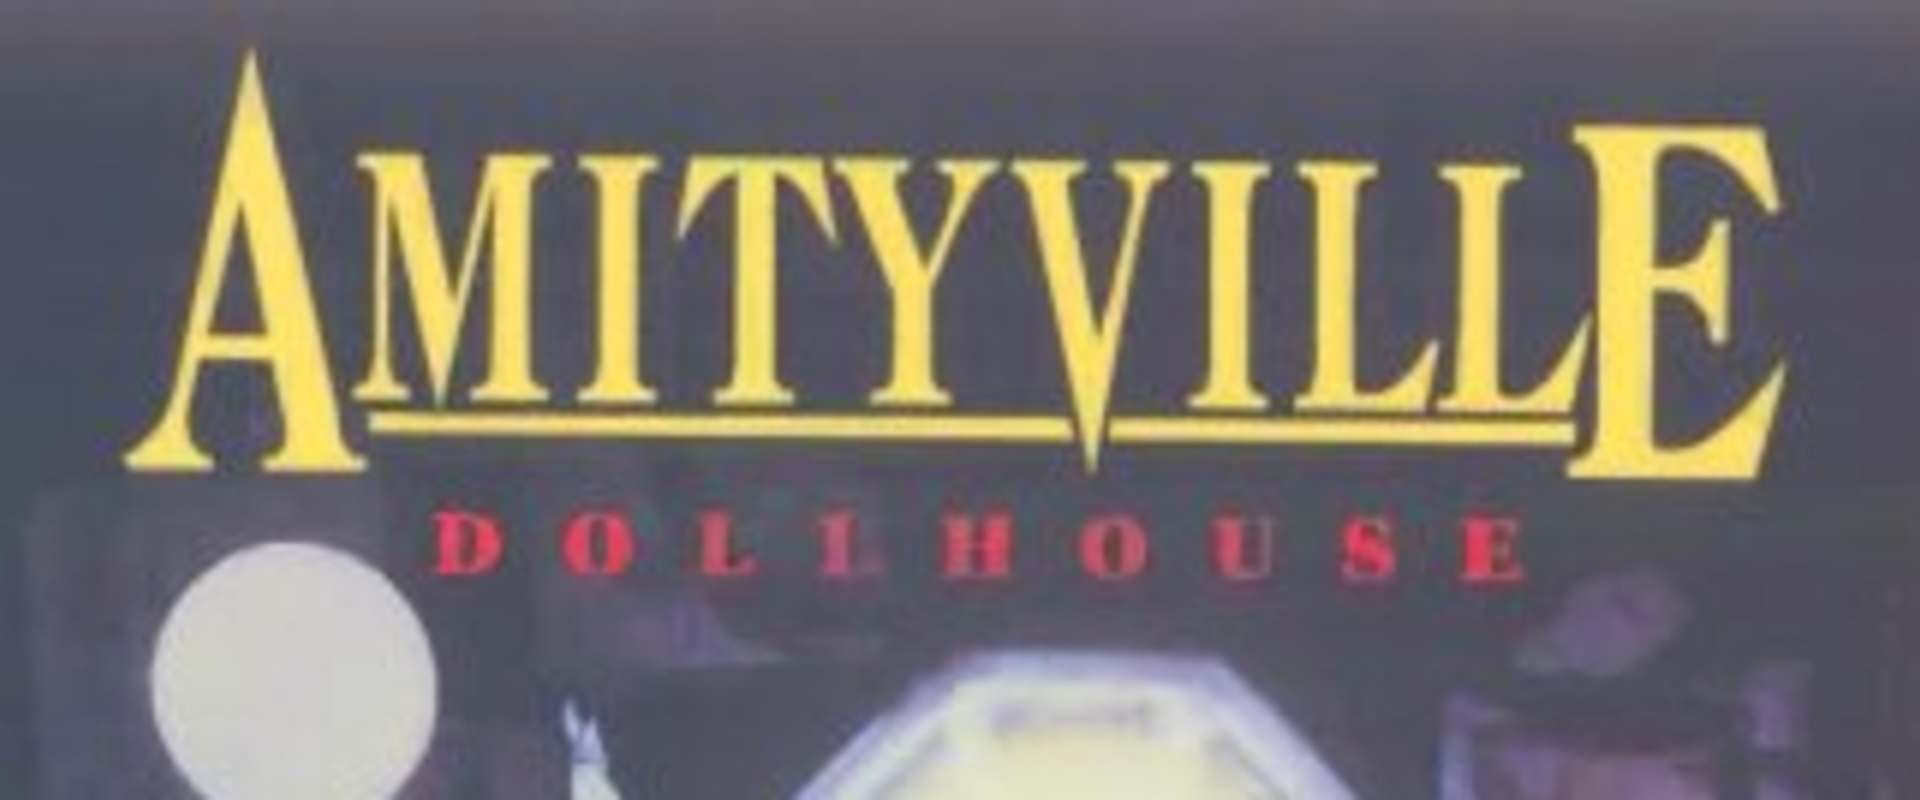 Amityville: Dollhouse background 1